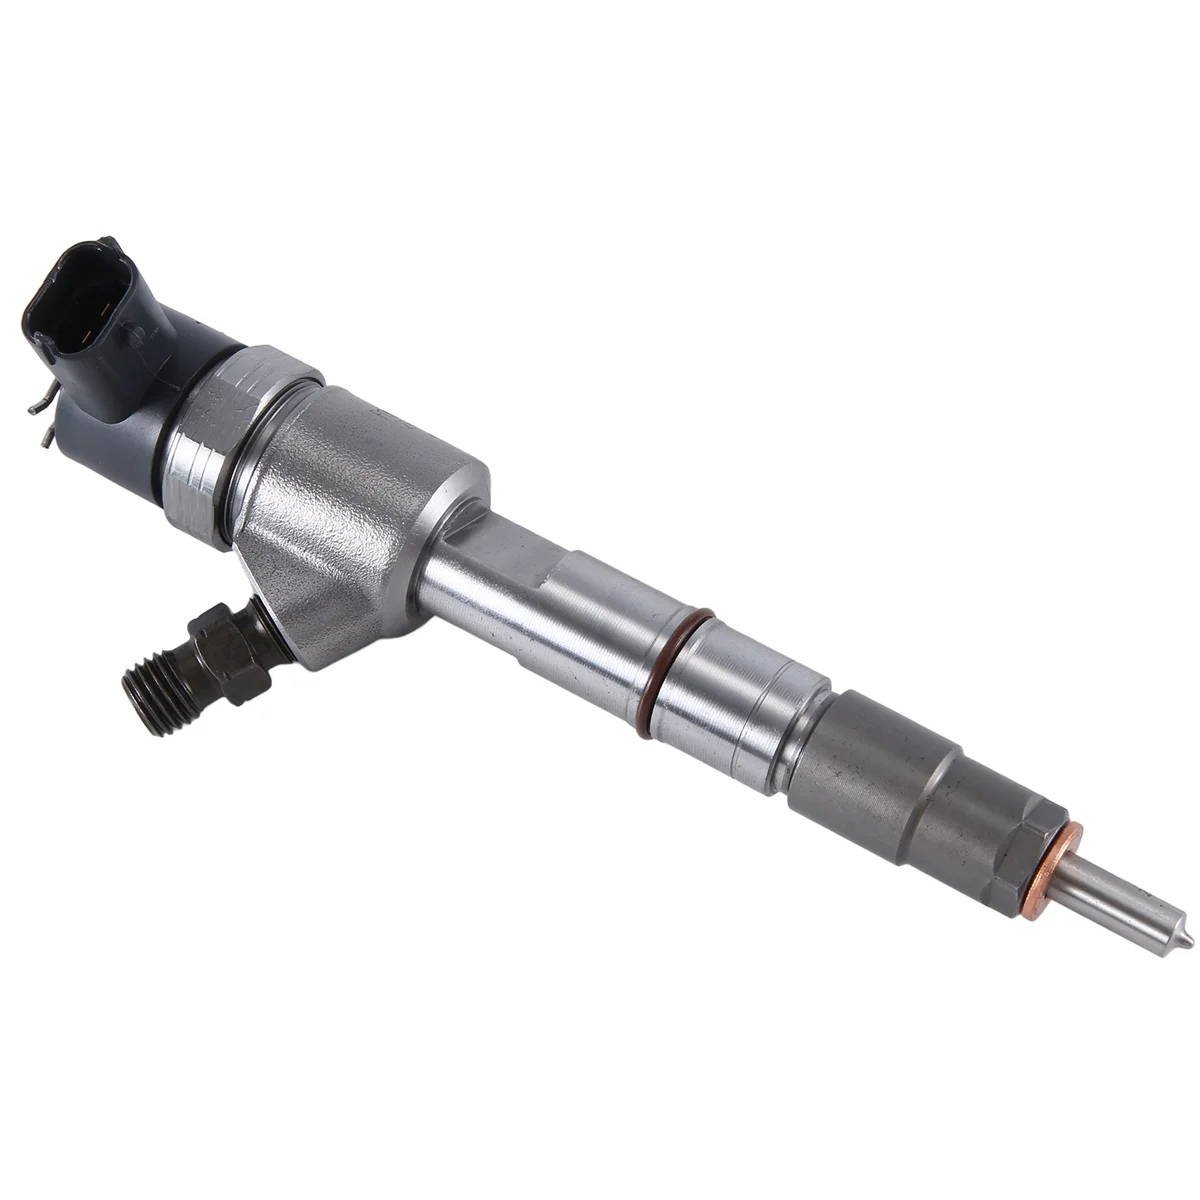 

0445110537 New Common Rail Diesel Fuel Injector Nozzle for ISUZU JMC